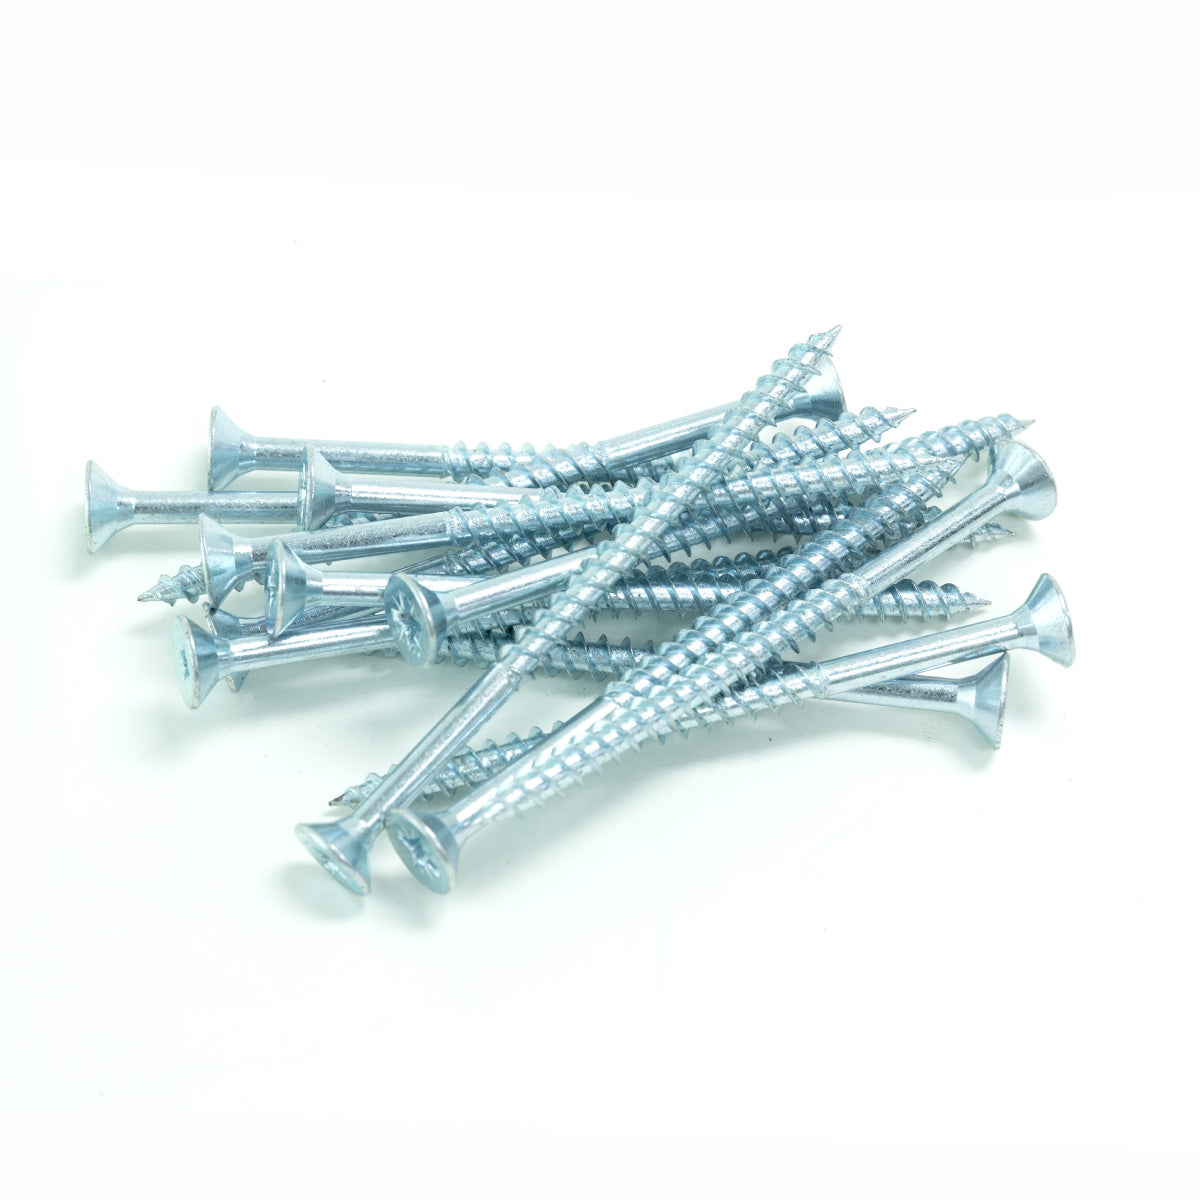 80pcs zinc plated countersunk twin thread screws 4x50mm (no brand name)